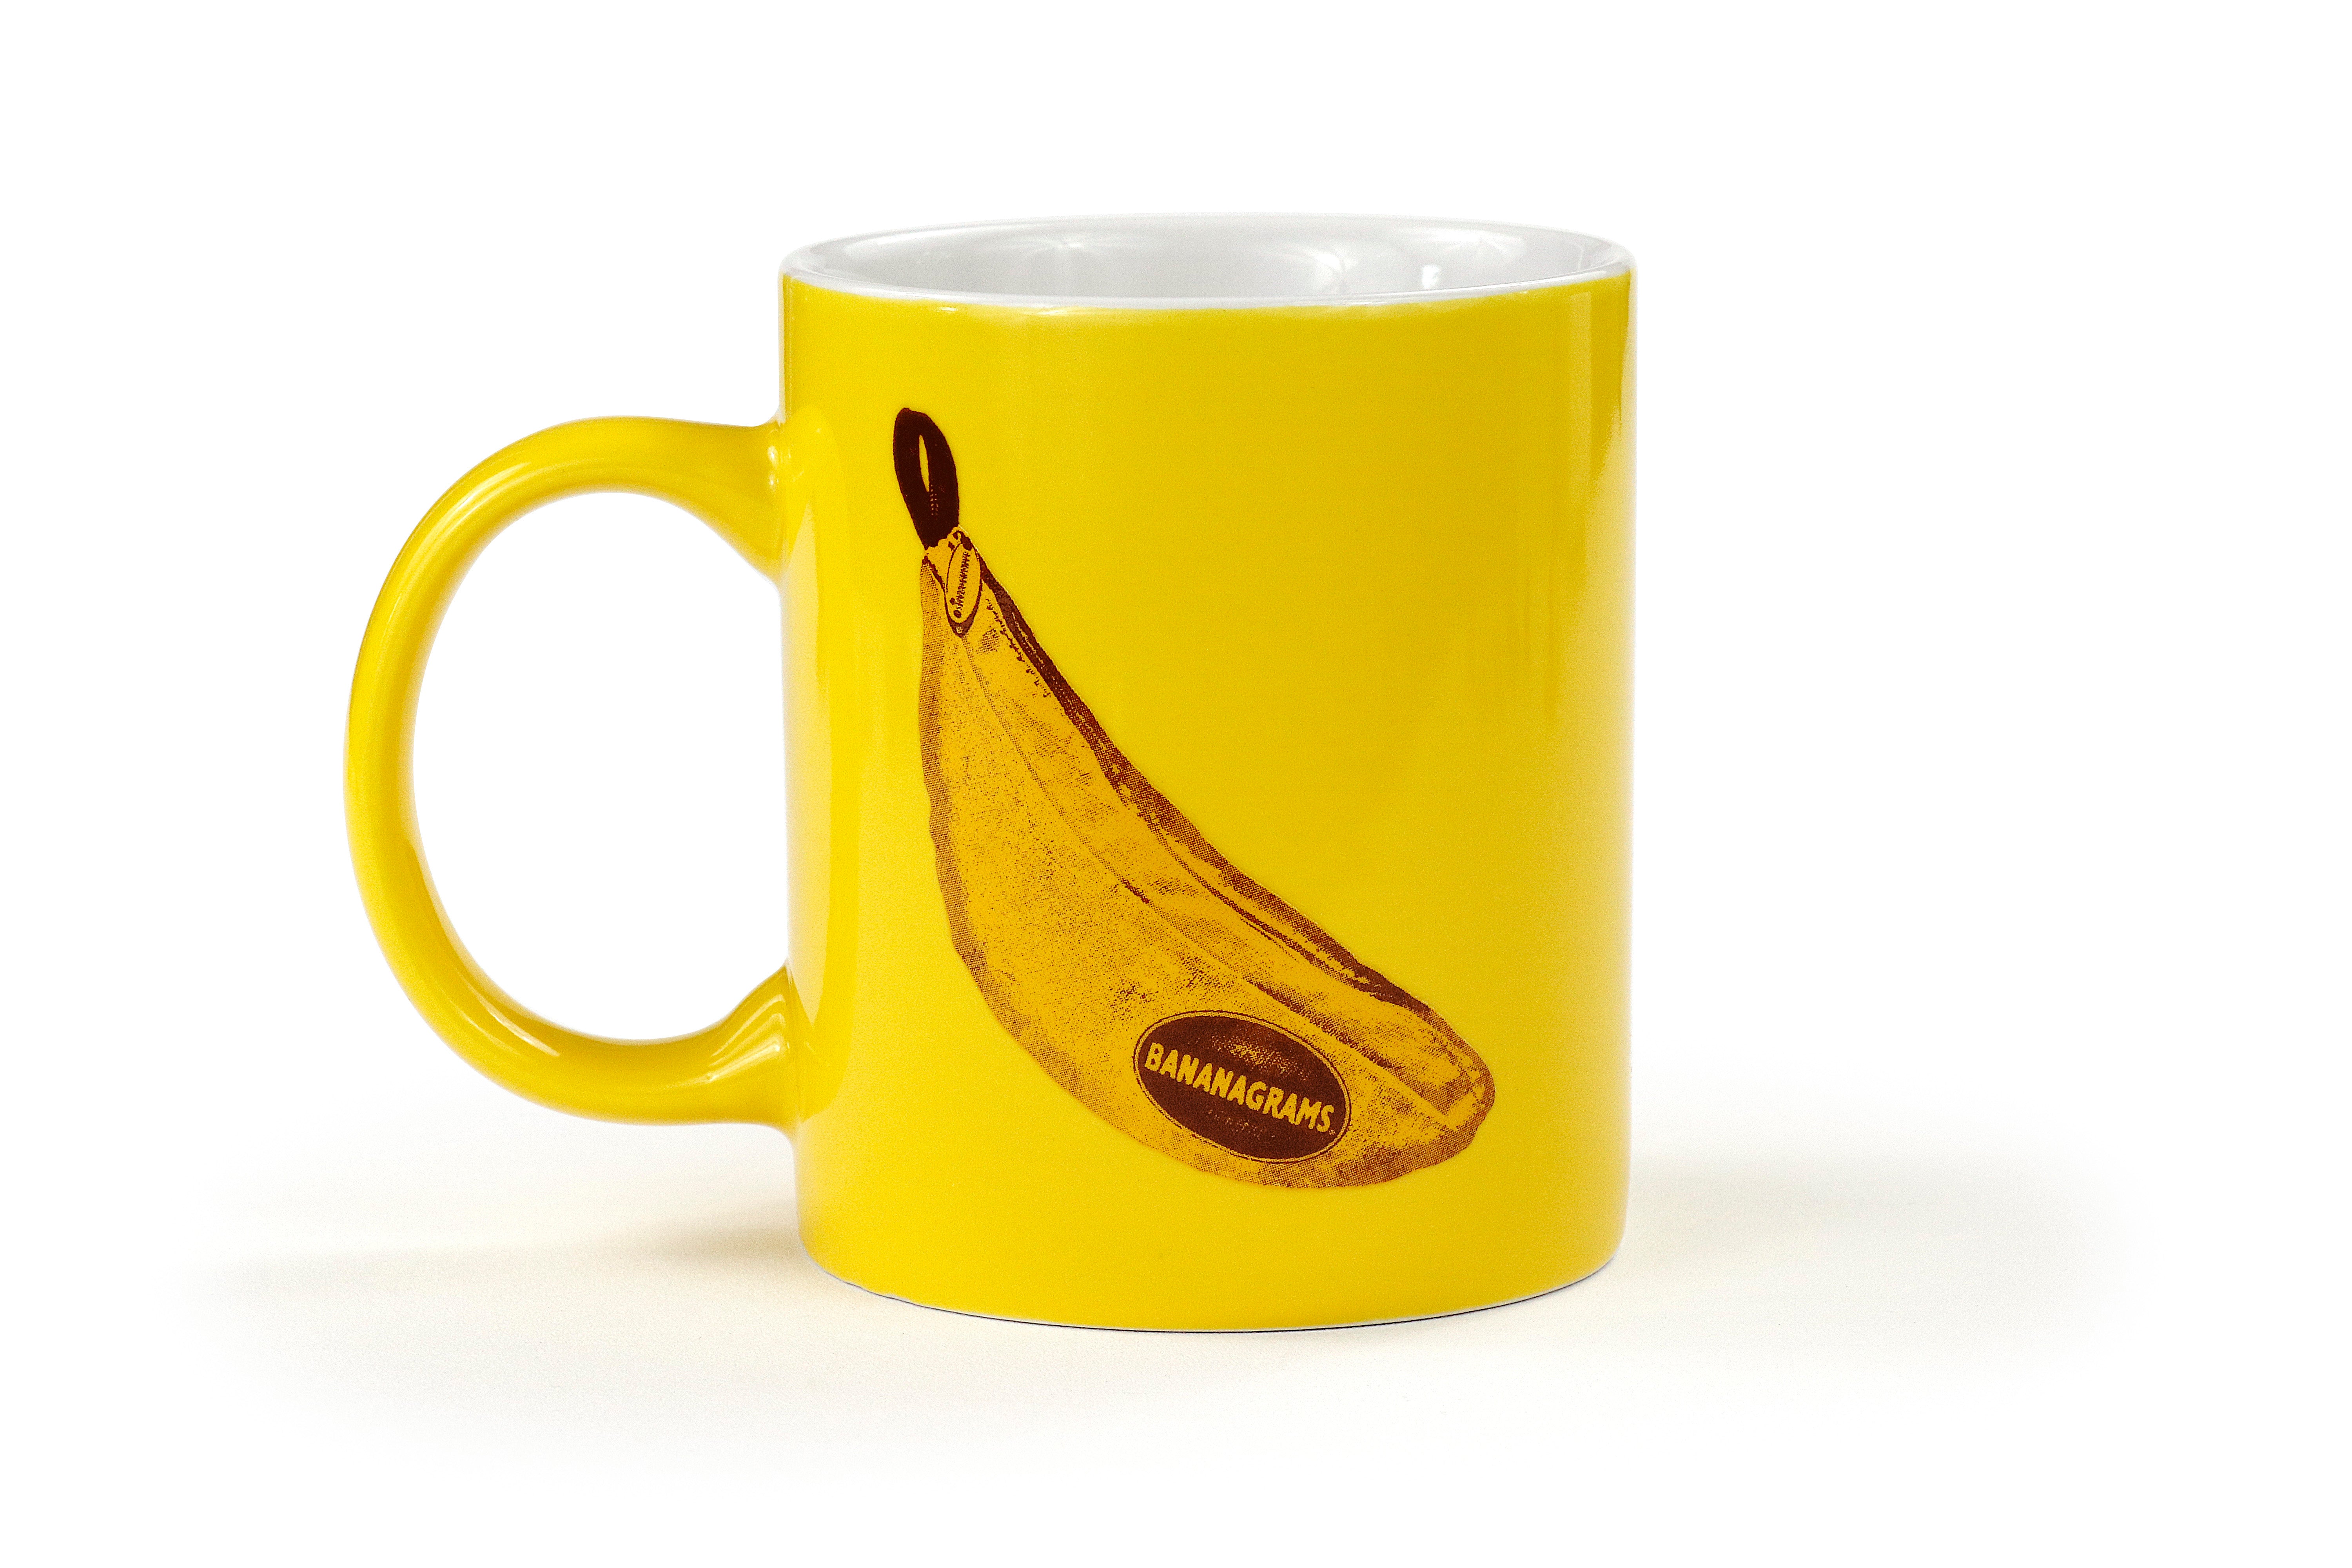 New!! Bananagrams Ceramic Mug